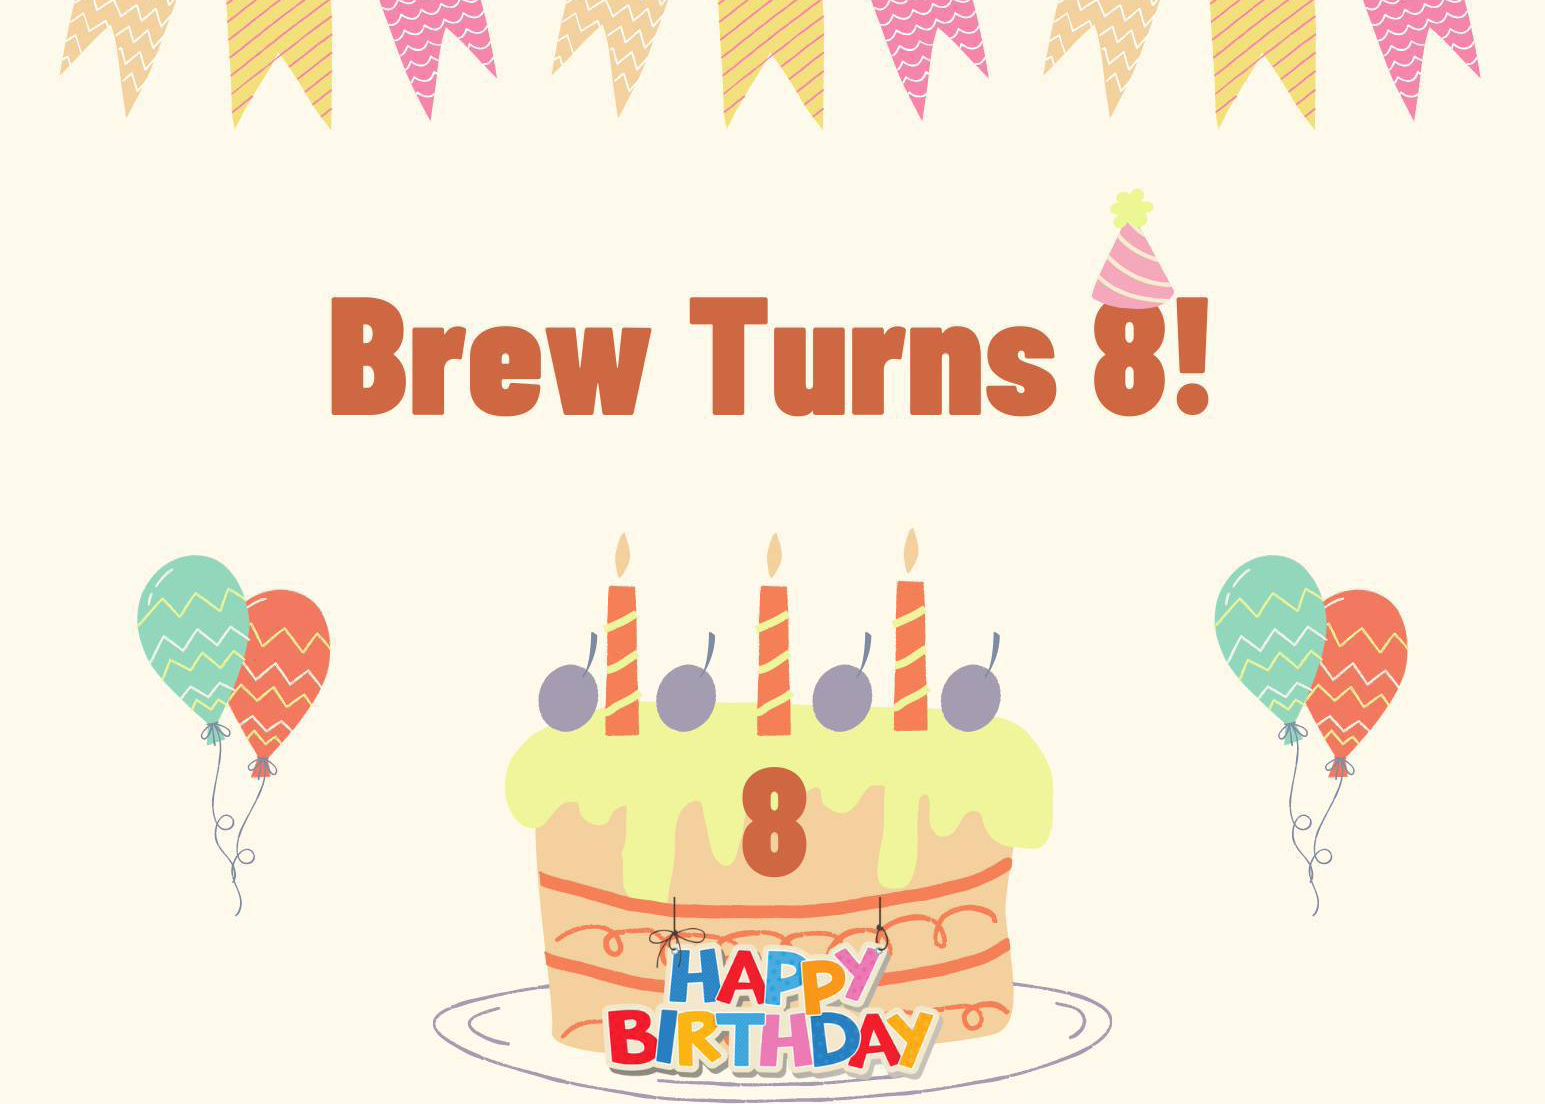 Brew Coffee Bar Turns 8!